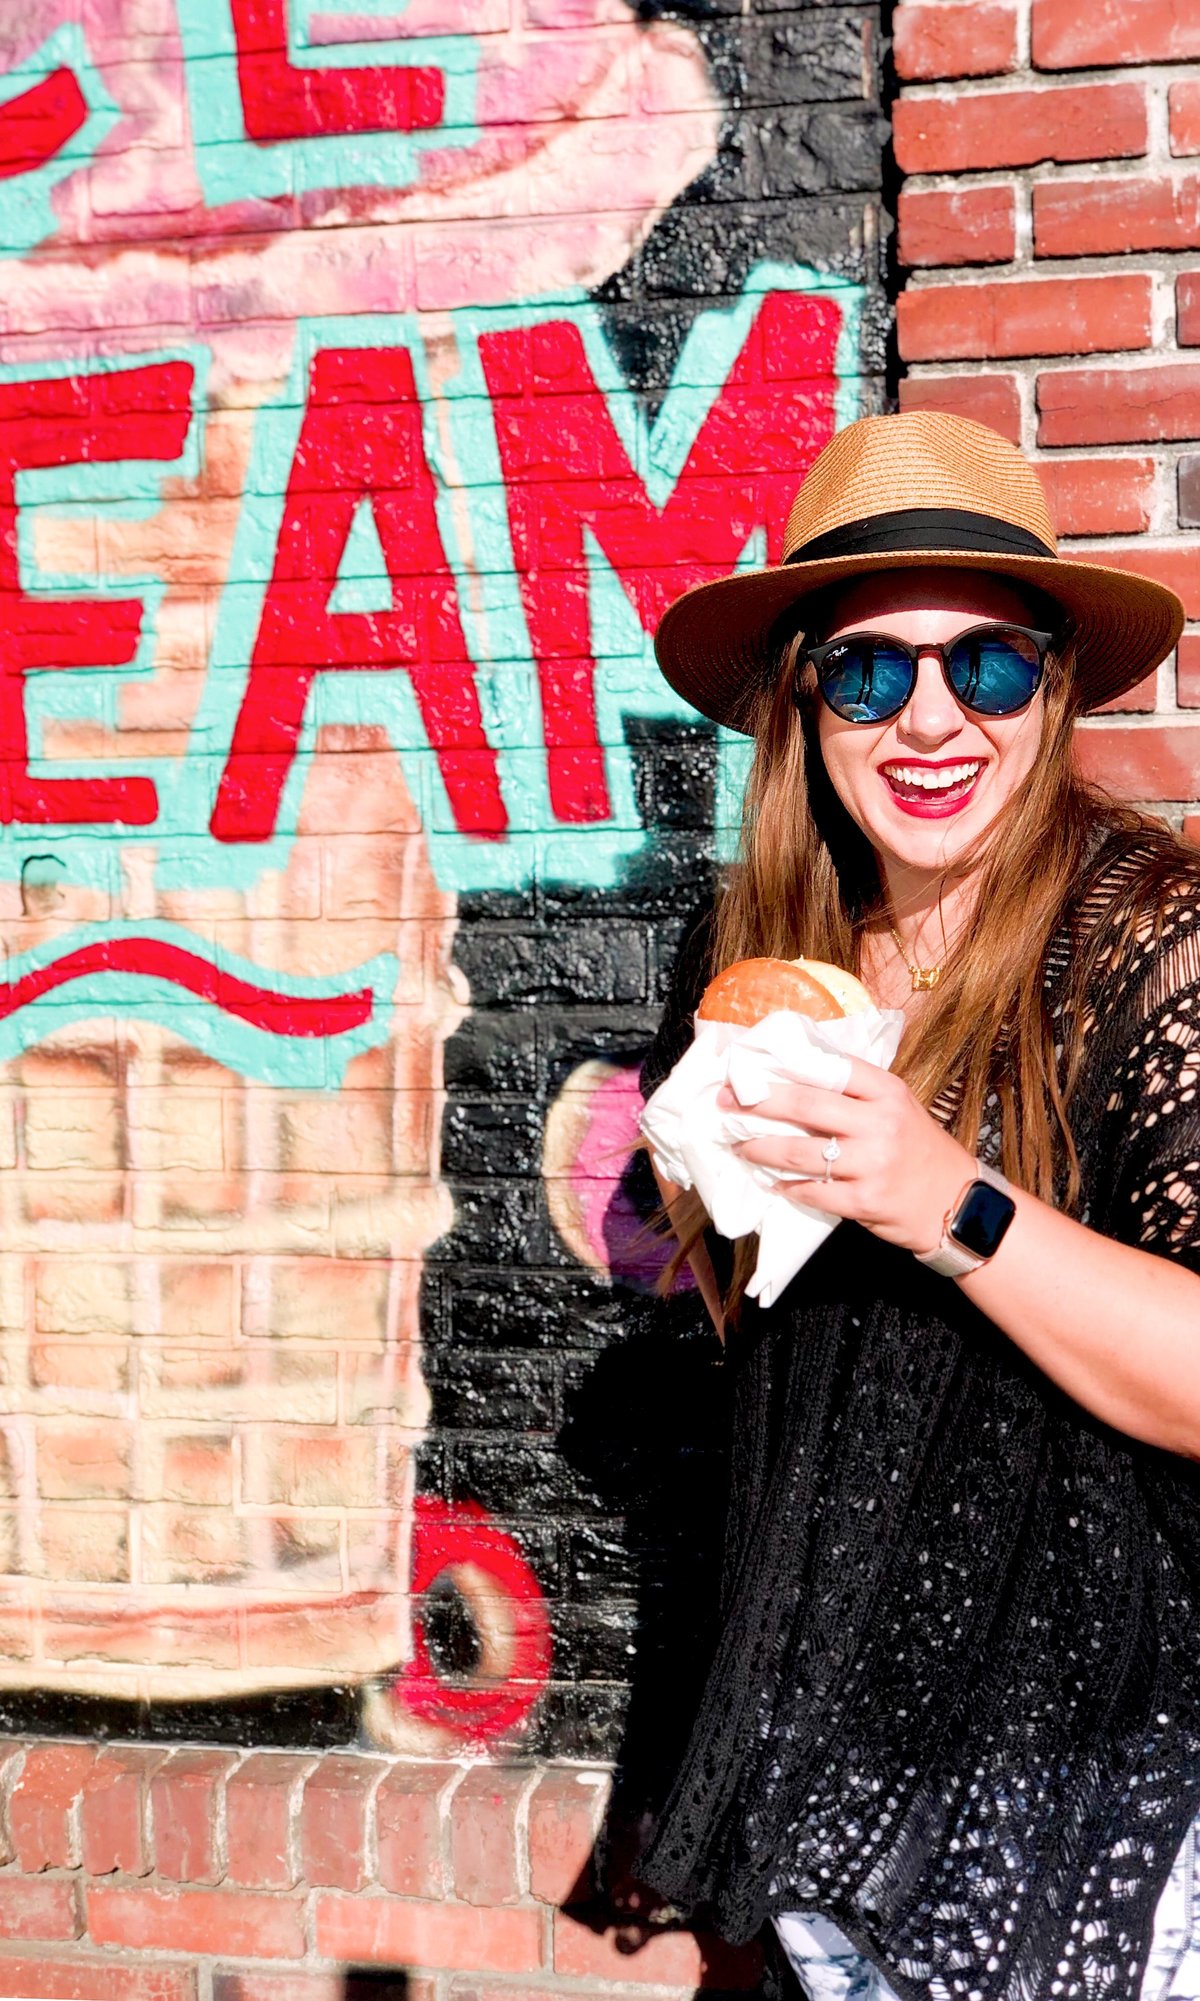 A girl eats an ice cream donut sandwich in the summer sun